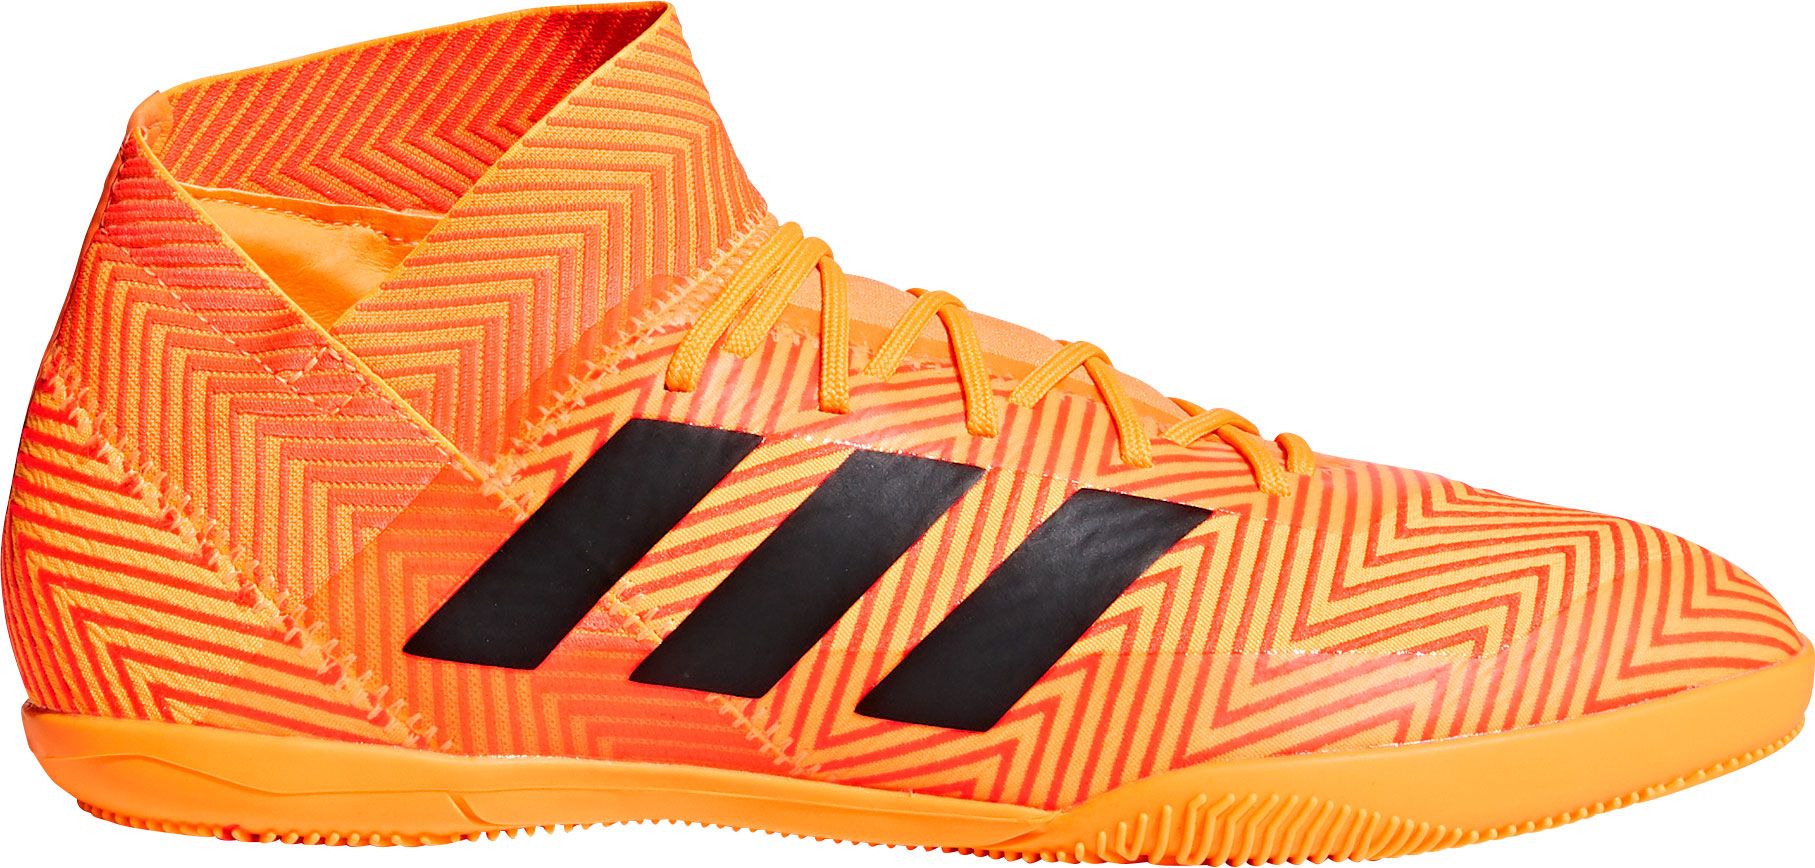 adidas indoor soccer shoes orange